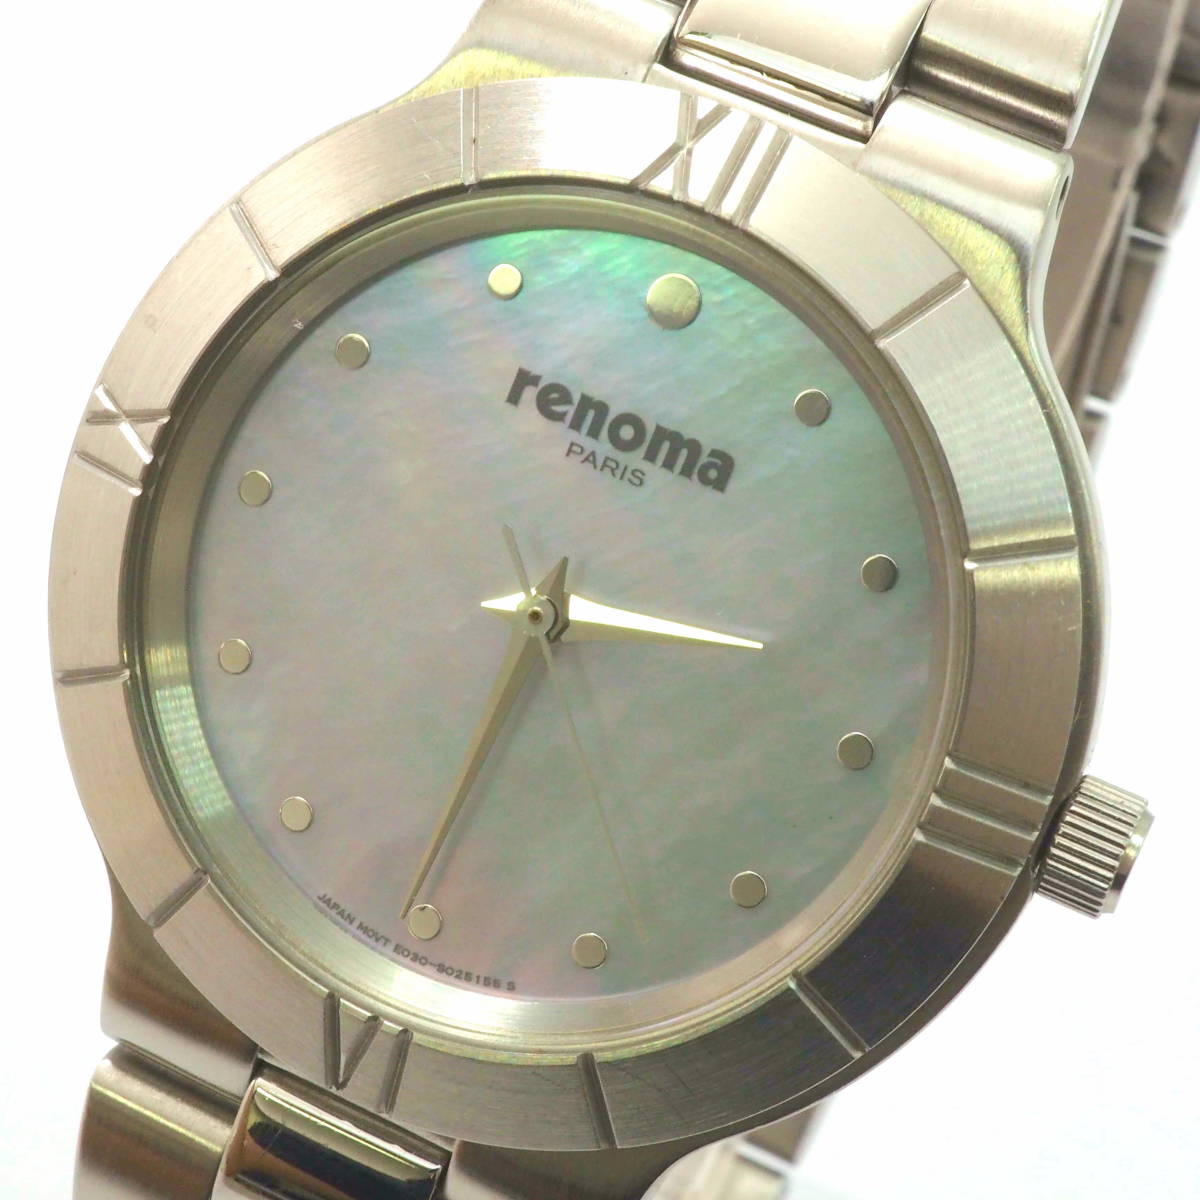 Yahoo!オークション -「renomaレノマ」(メンズ腕時計) の落札相場 